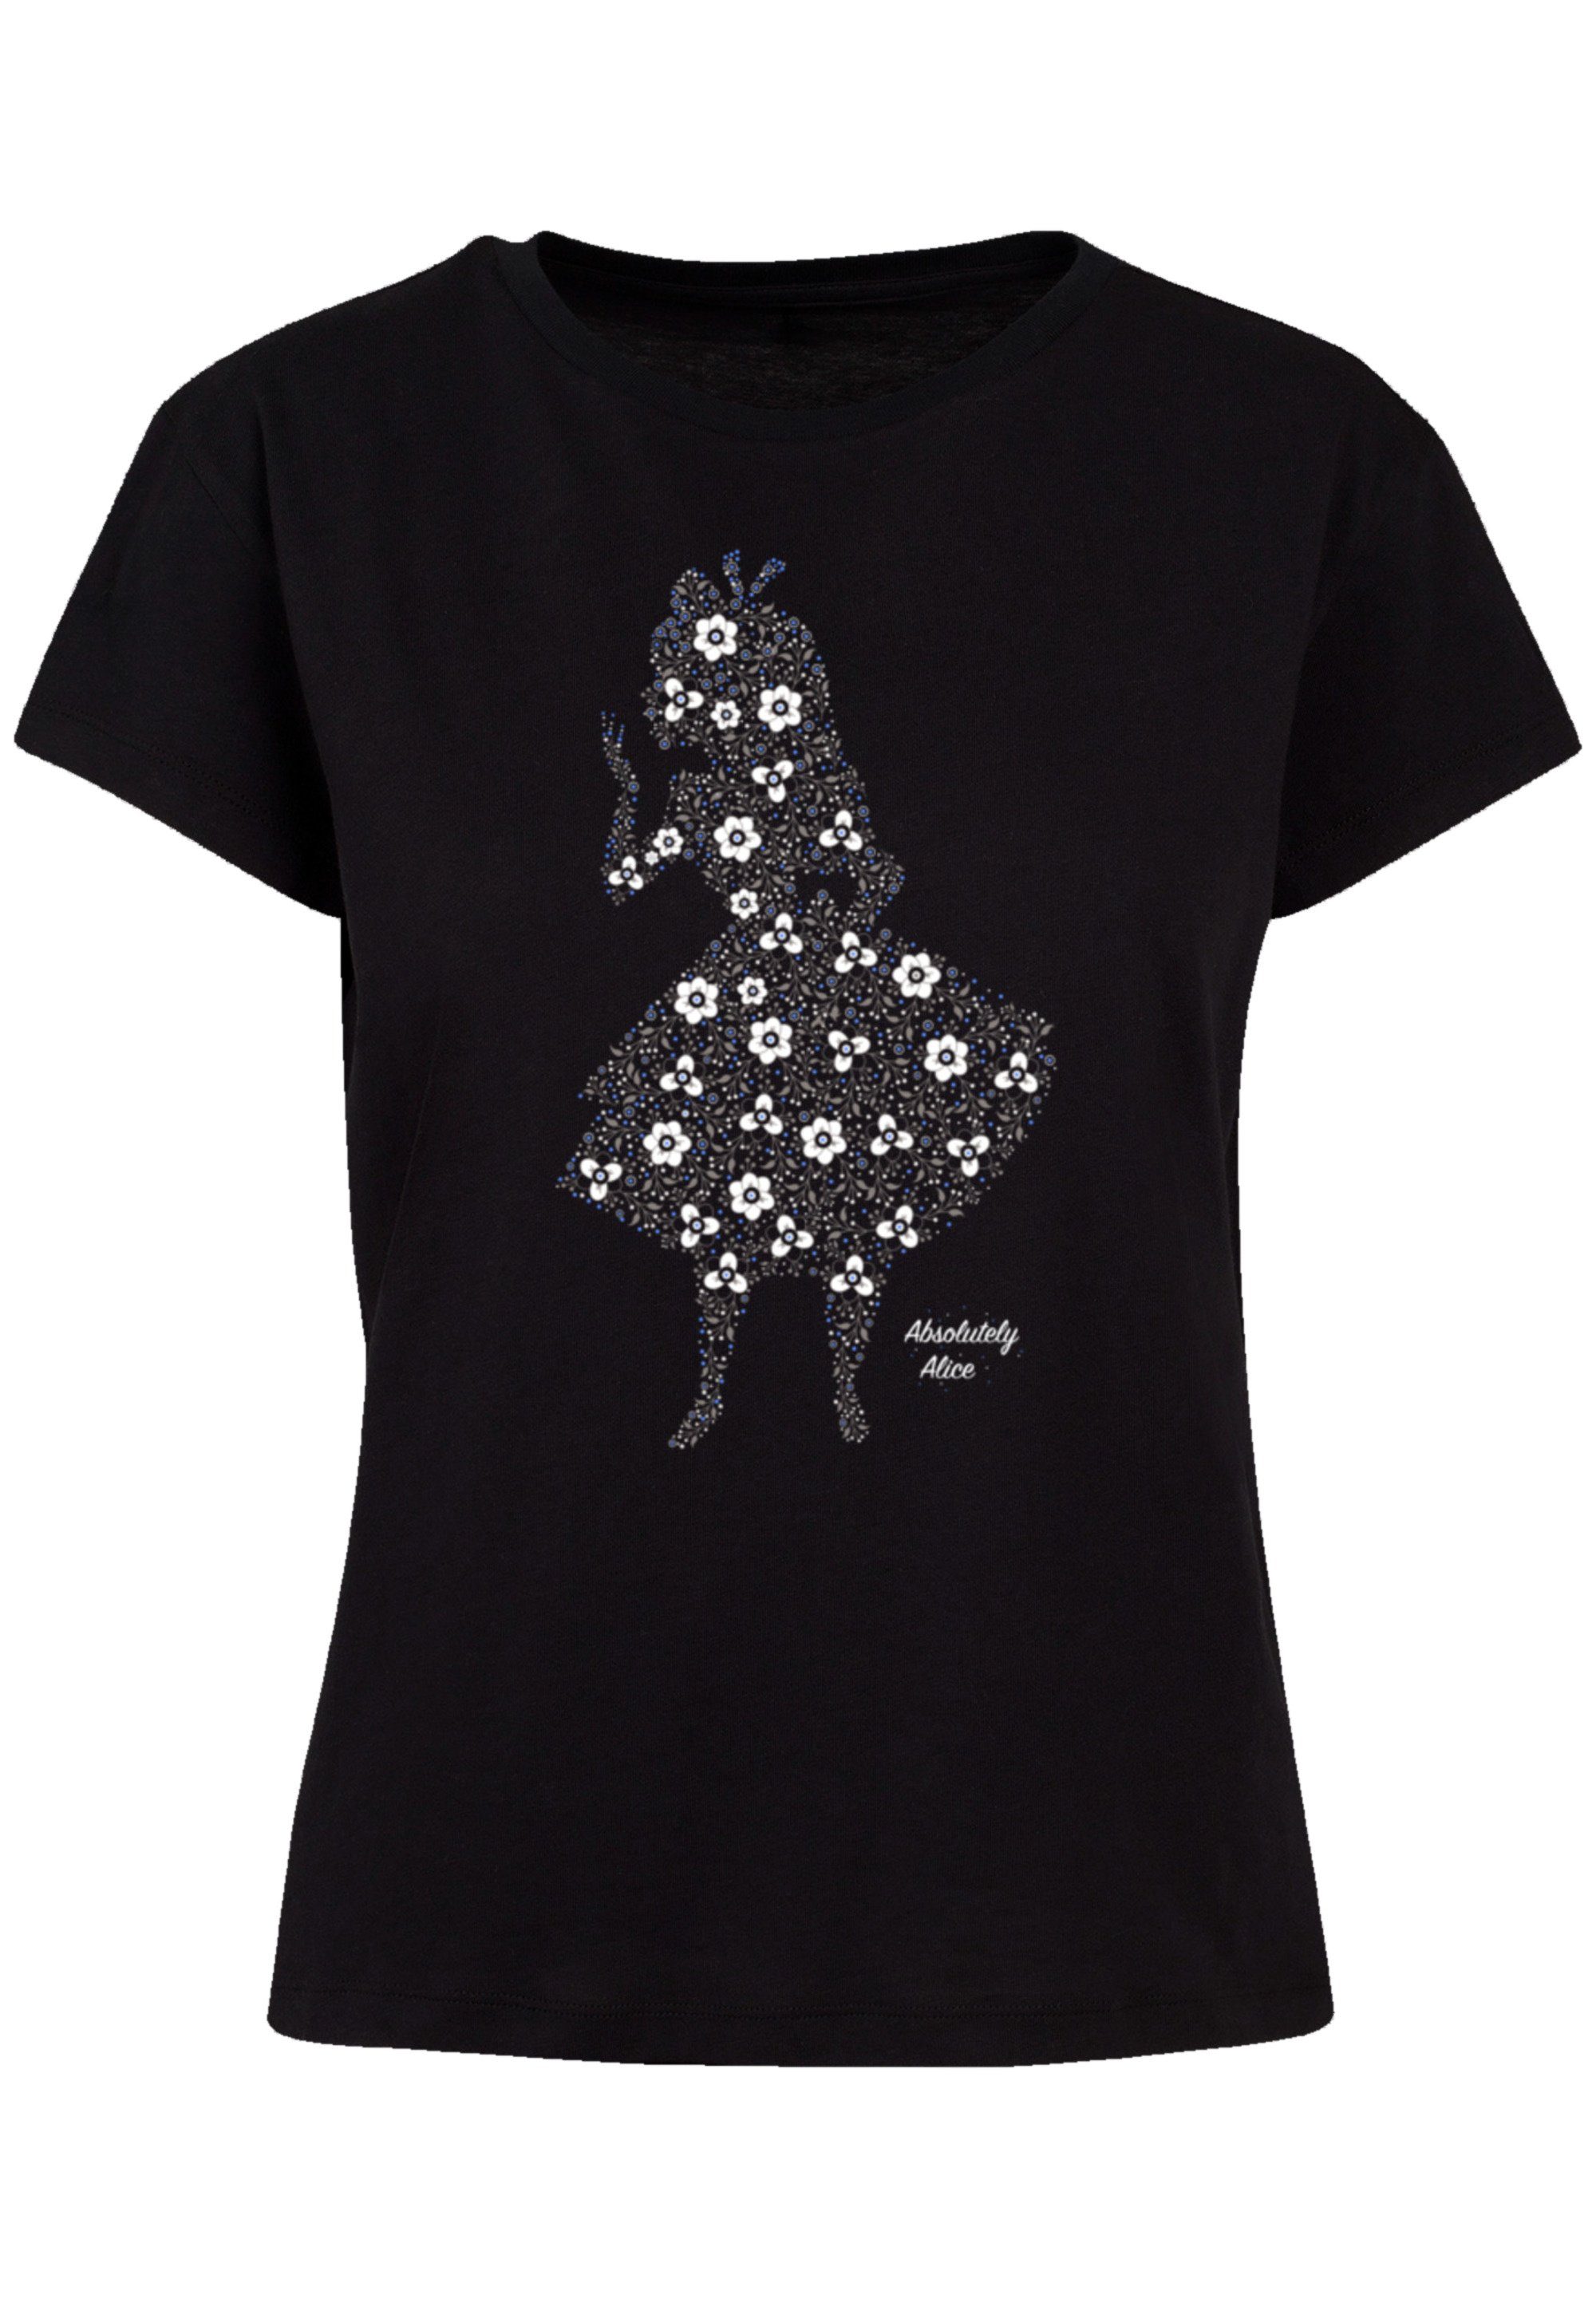 F4NT4STIC T-Shirt Absolutely Wunderland Premium im Disney Qualität Alice Alice